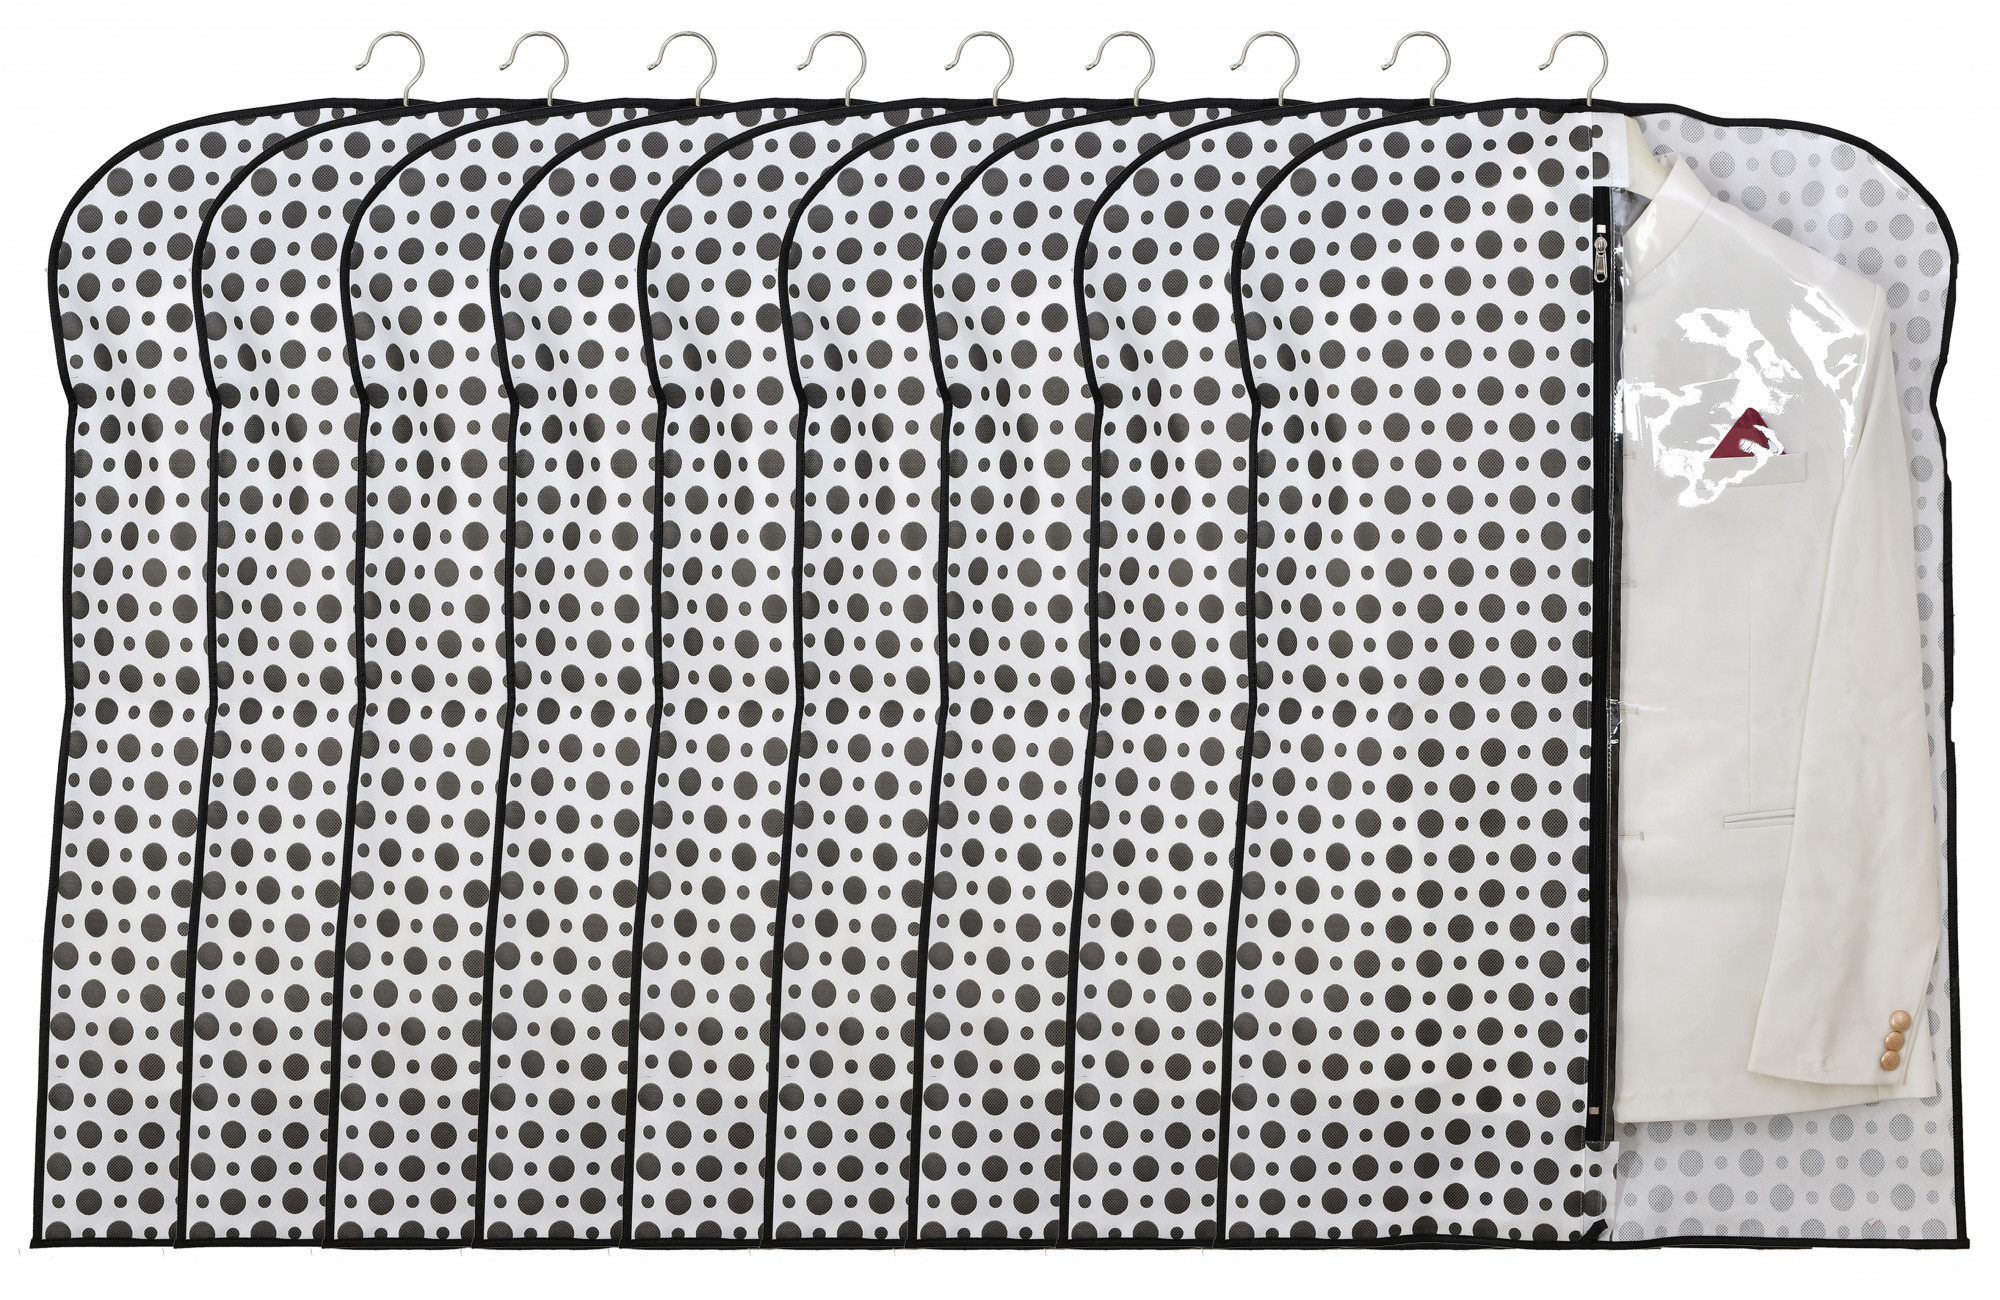 Kuber Industries Polka Dots Printed Half Transparent Non Woven Men's Coat Blazer Cover (Black & White) -KUBMART874